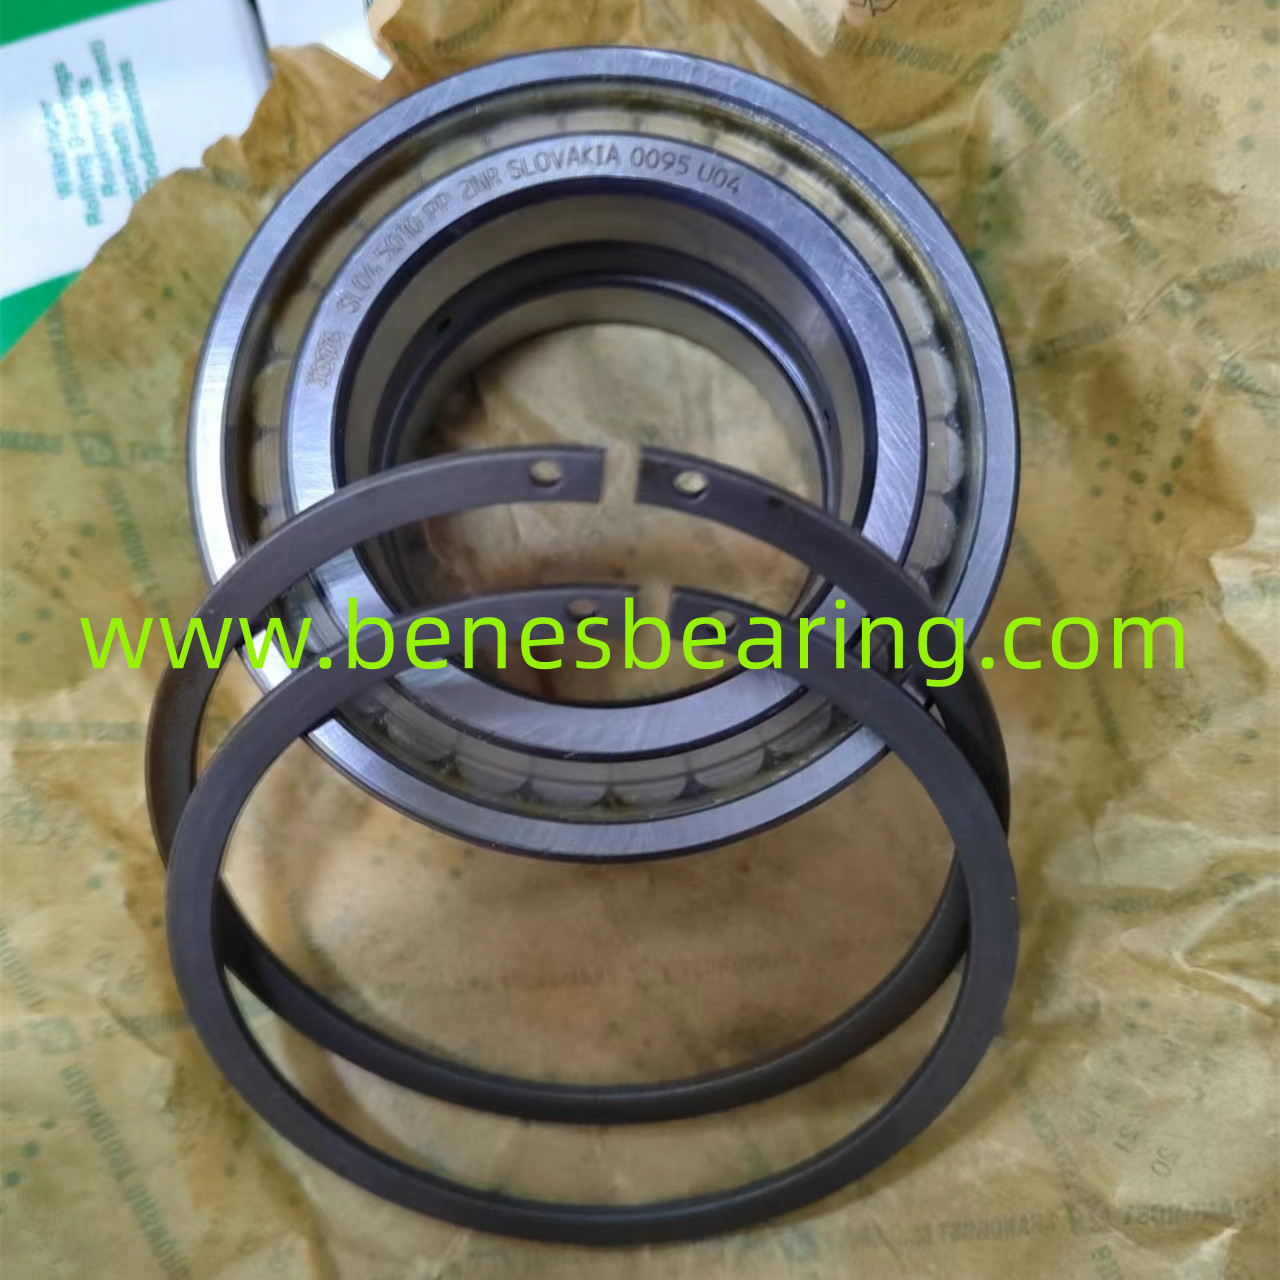 INA  SL045010-PP-2NR  Cylindrical roller bearing 50*80*40cm   0.729kg